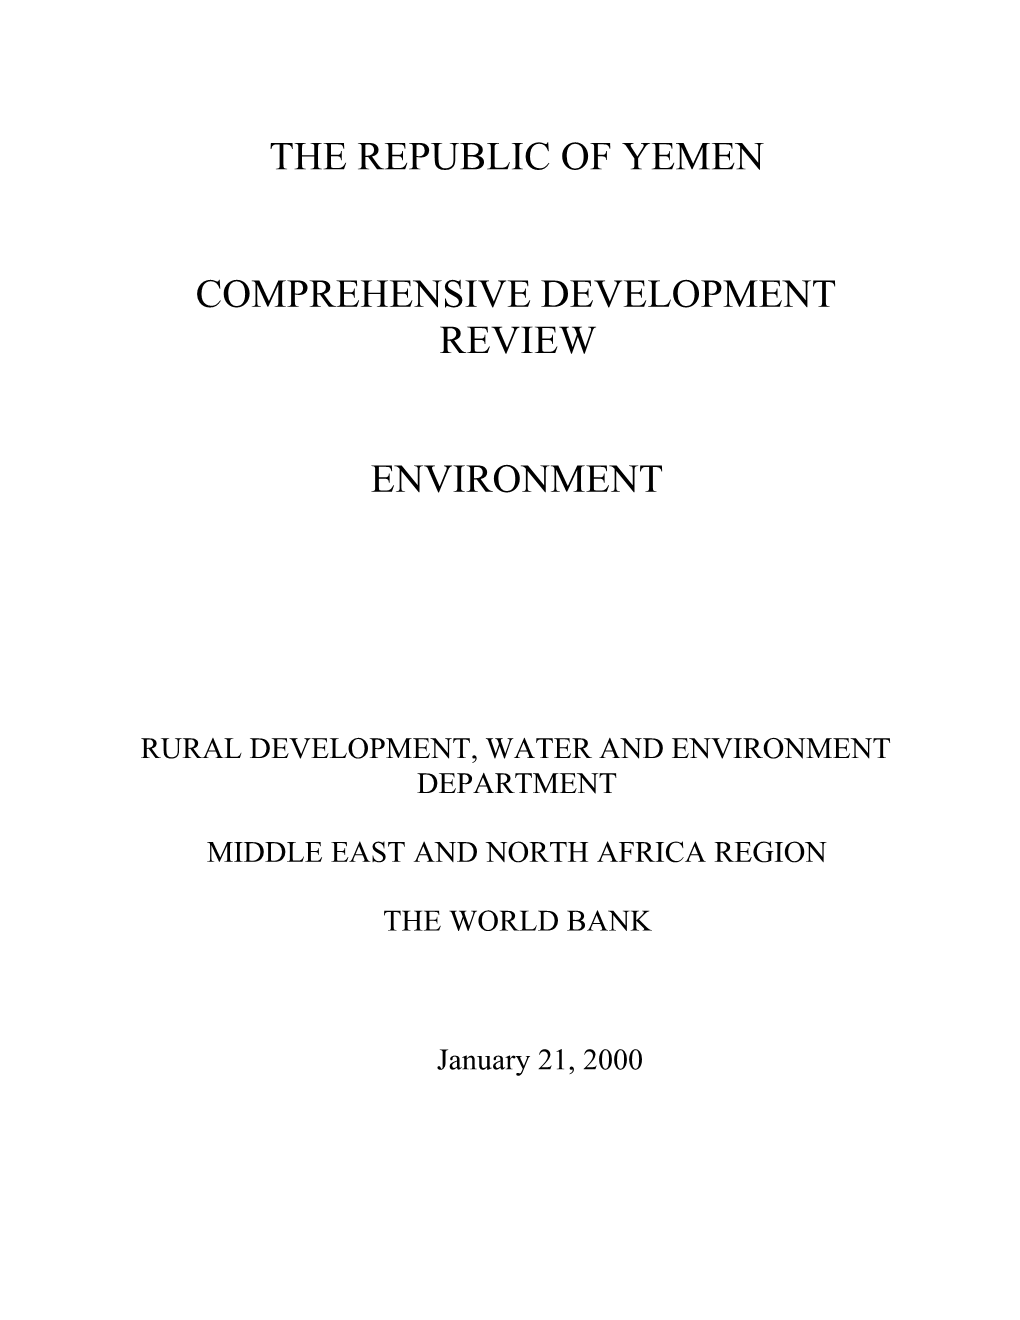 The Republic of Yemen Comprehensive